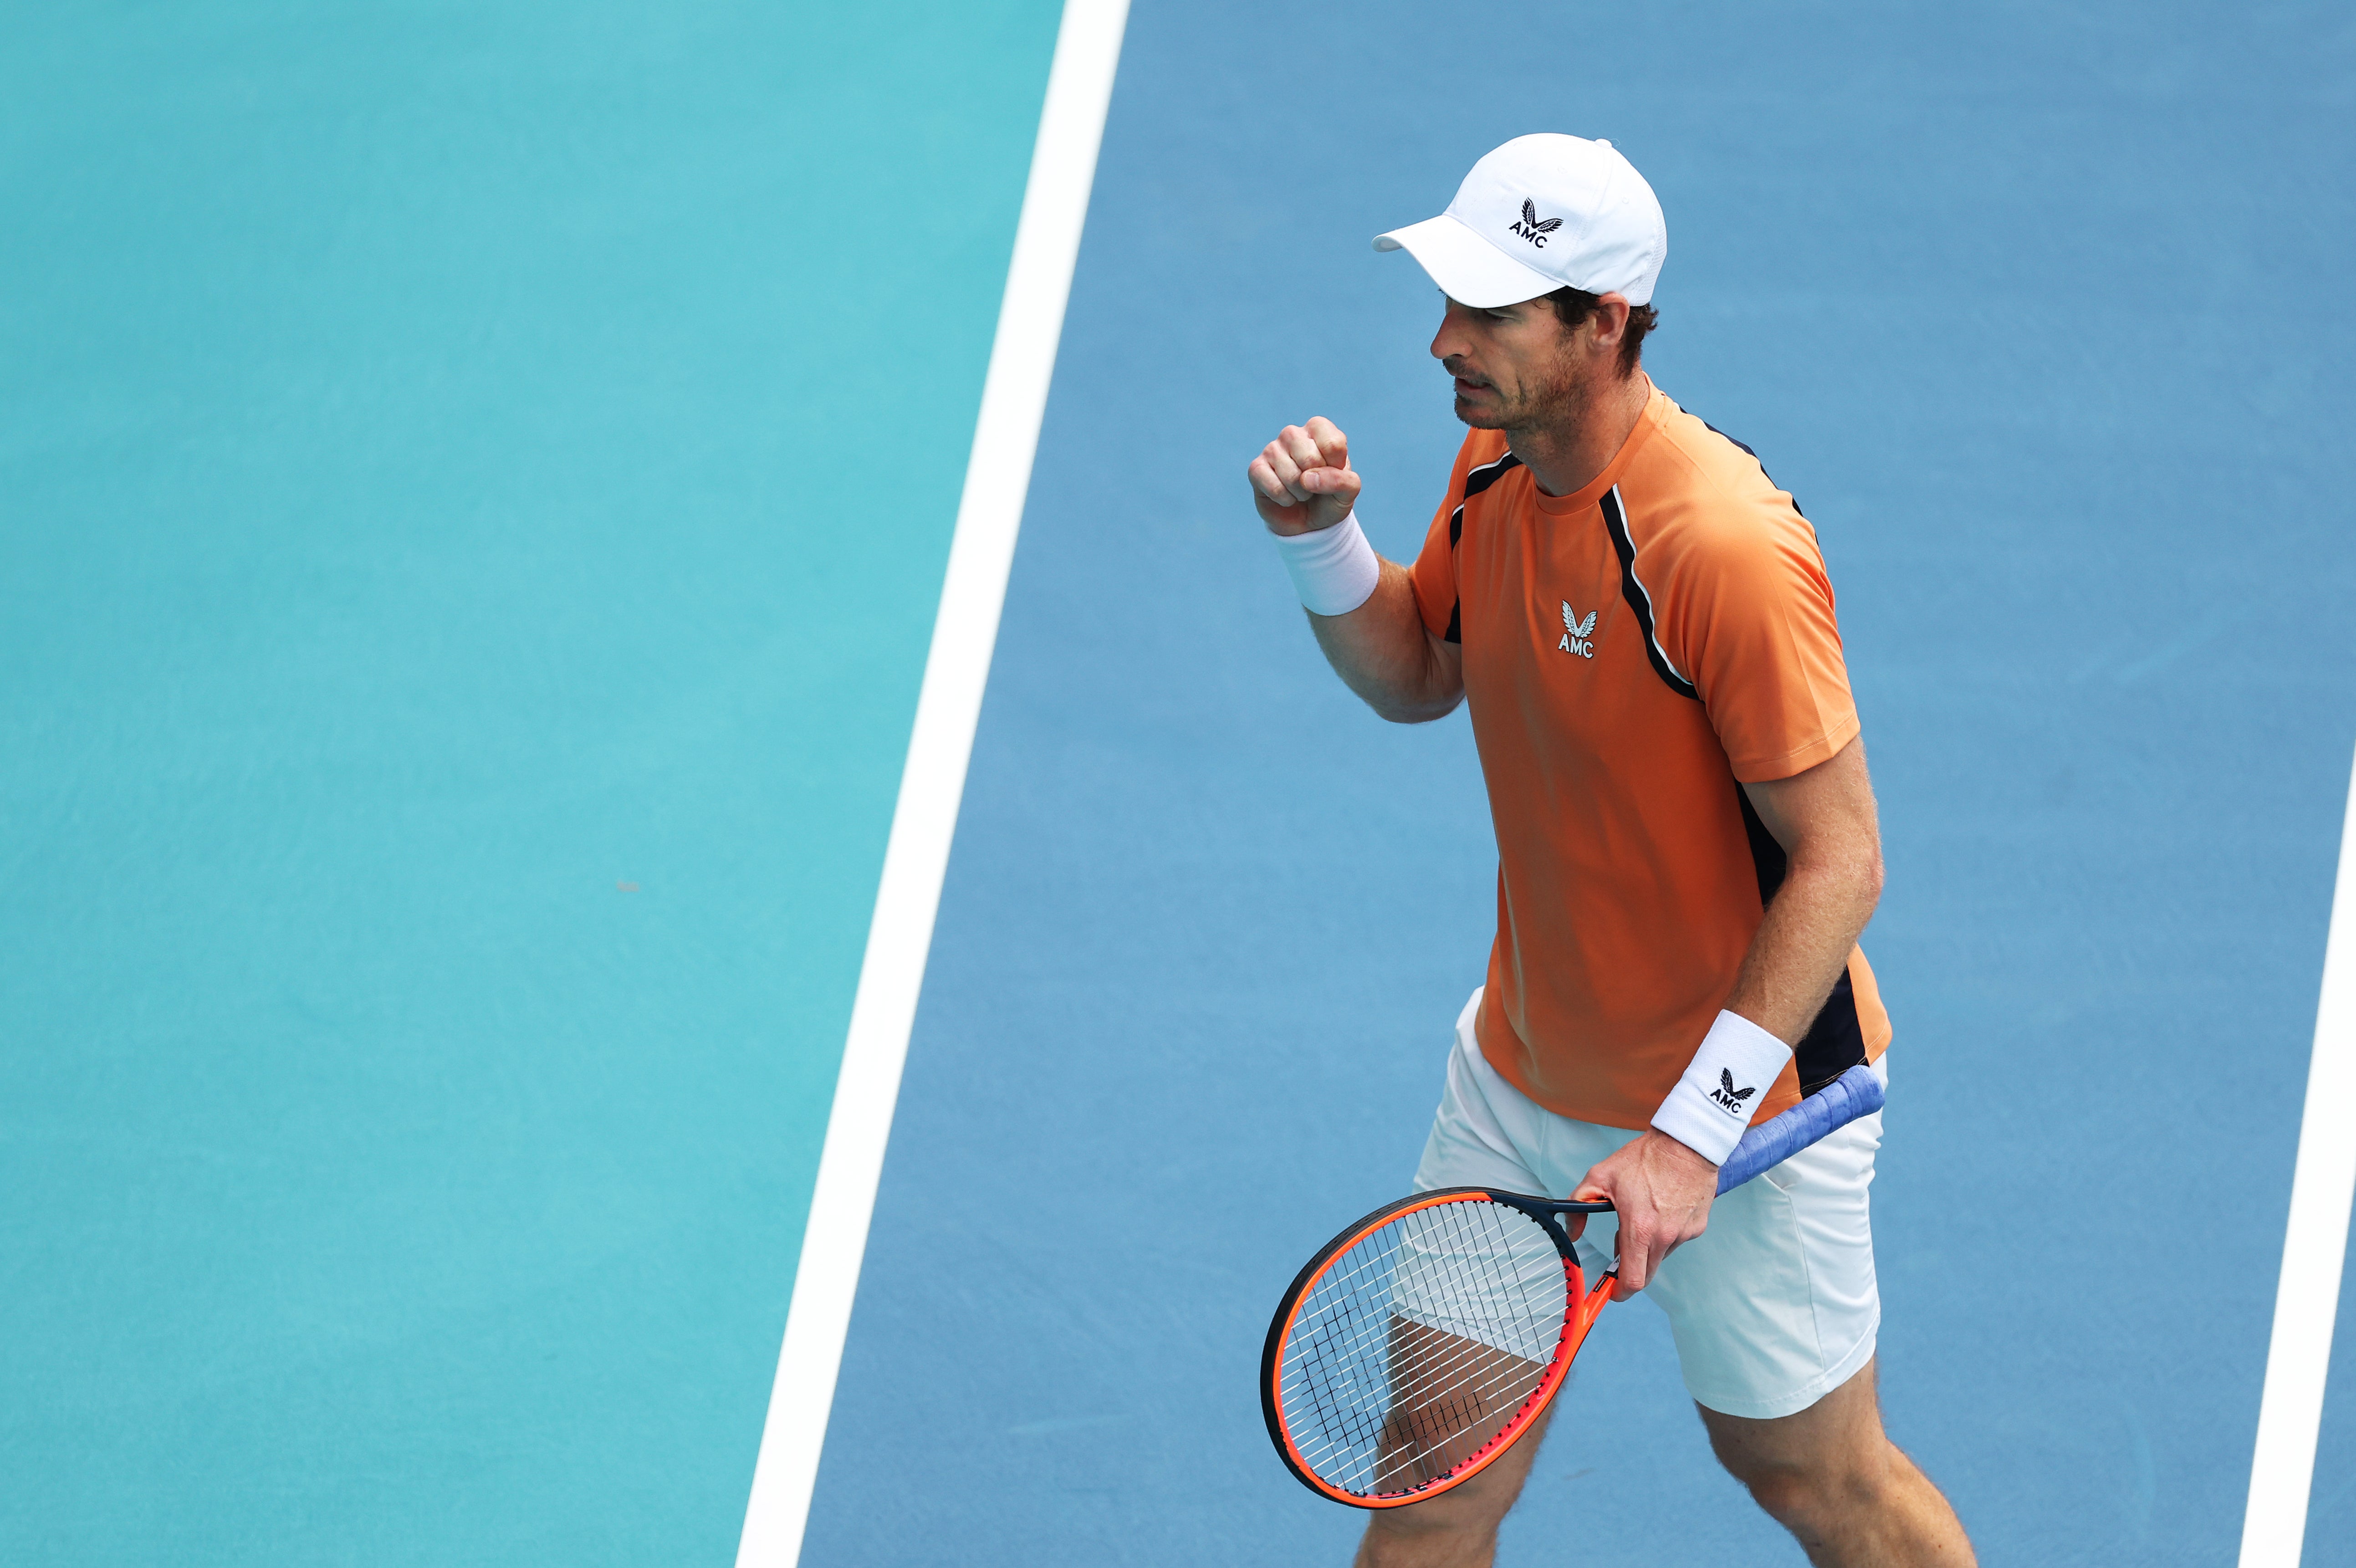 Andy Murray secured an impressive win over the Italian Matteo Berrettini at the Miami Open